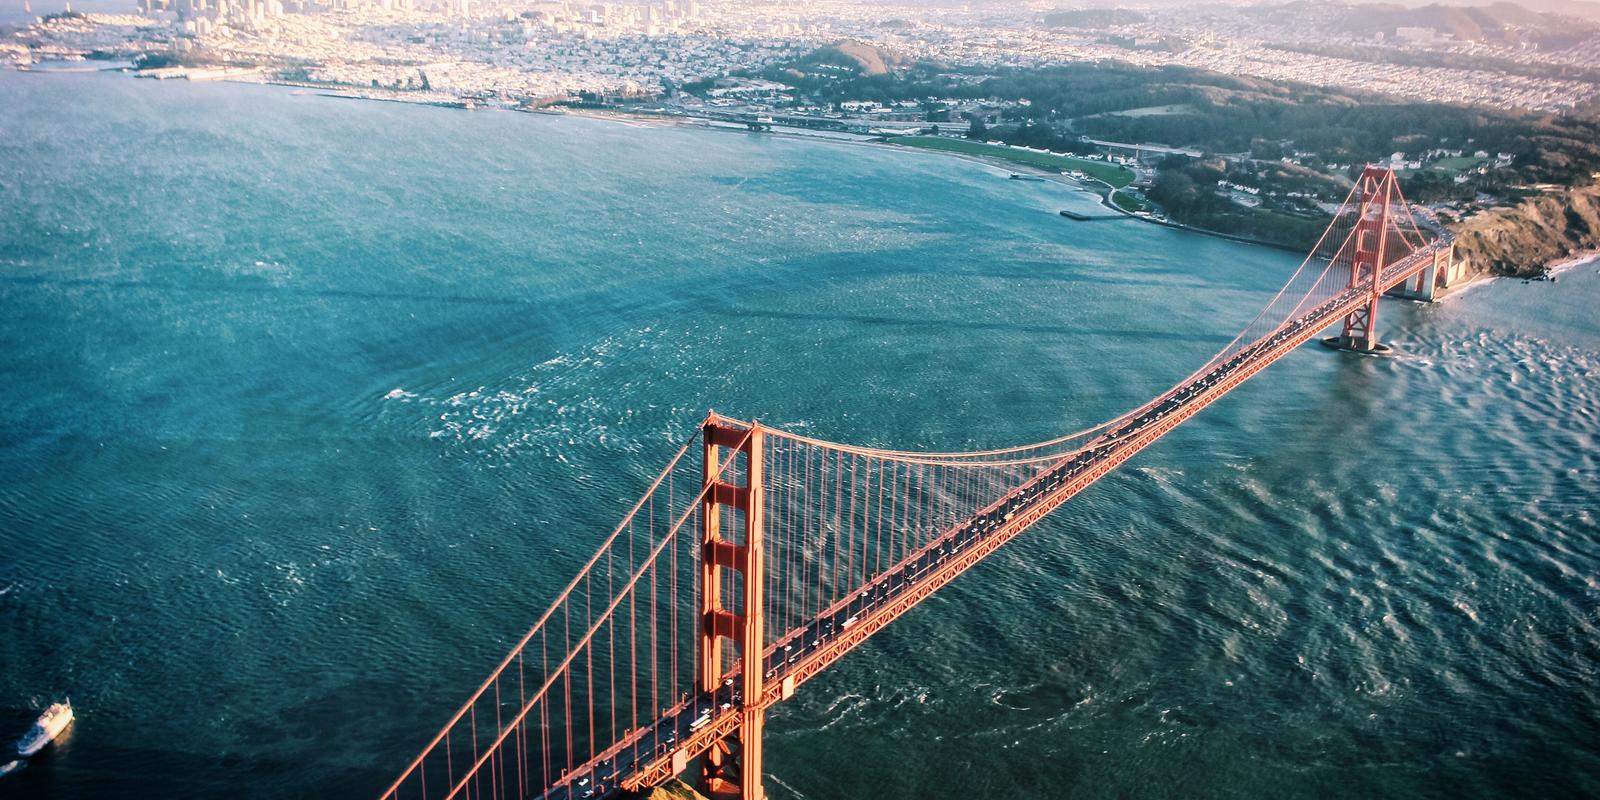 Aerial view of the San Francisco Golden Gate Bridge